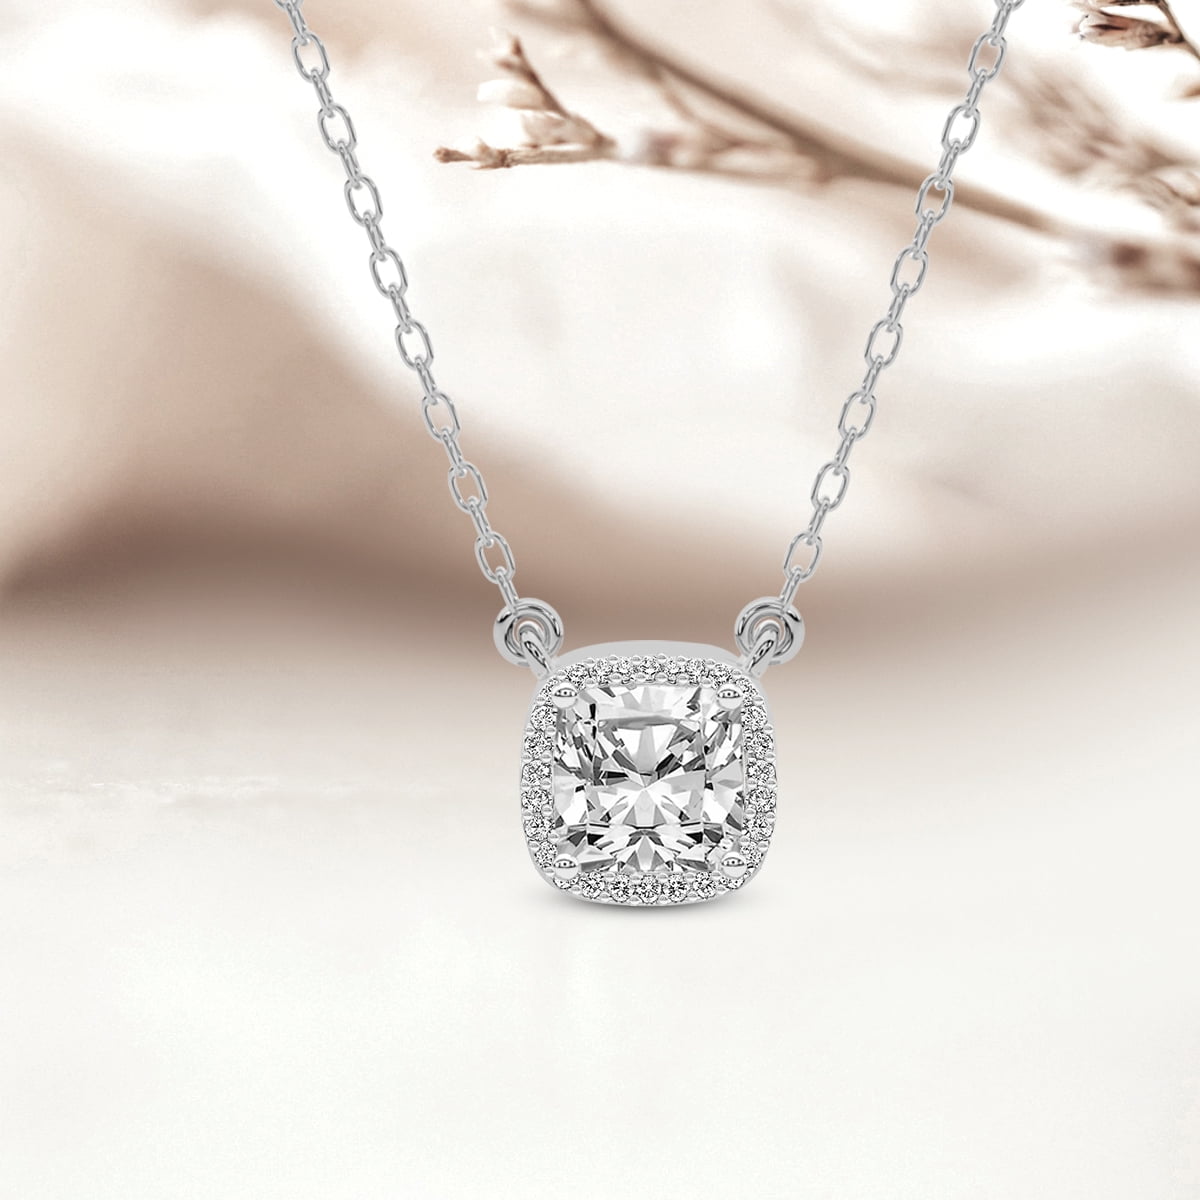 Cushion-Cut Diamond Pendant Necklace